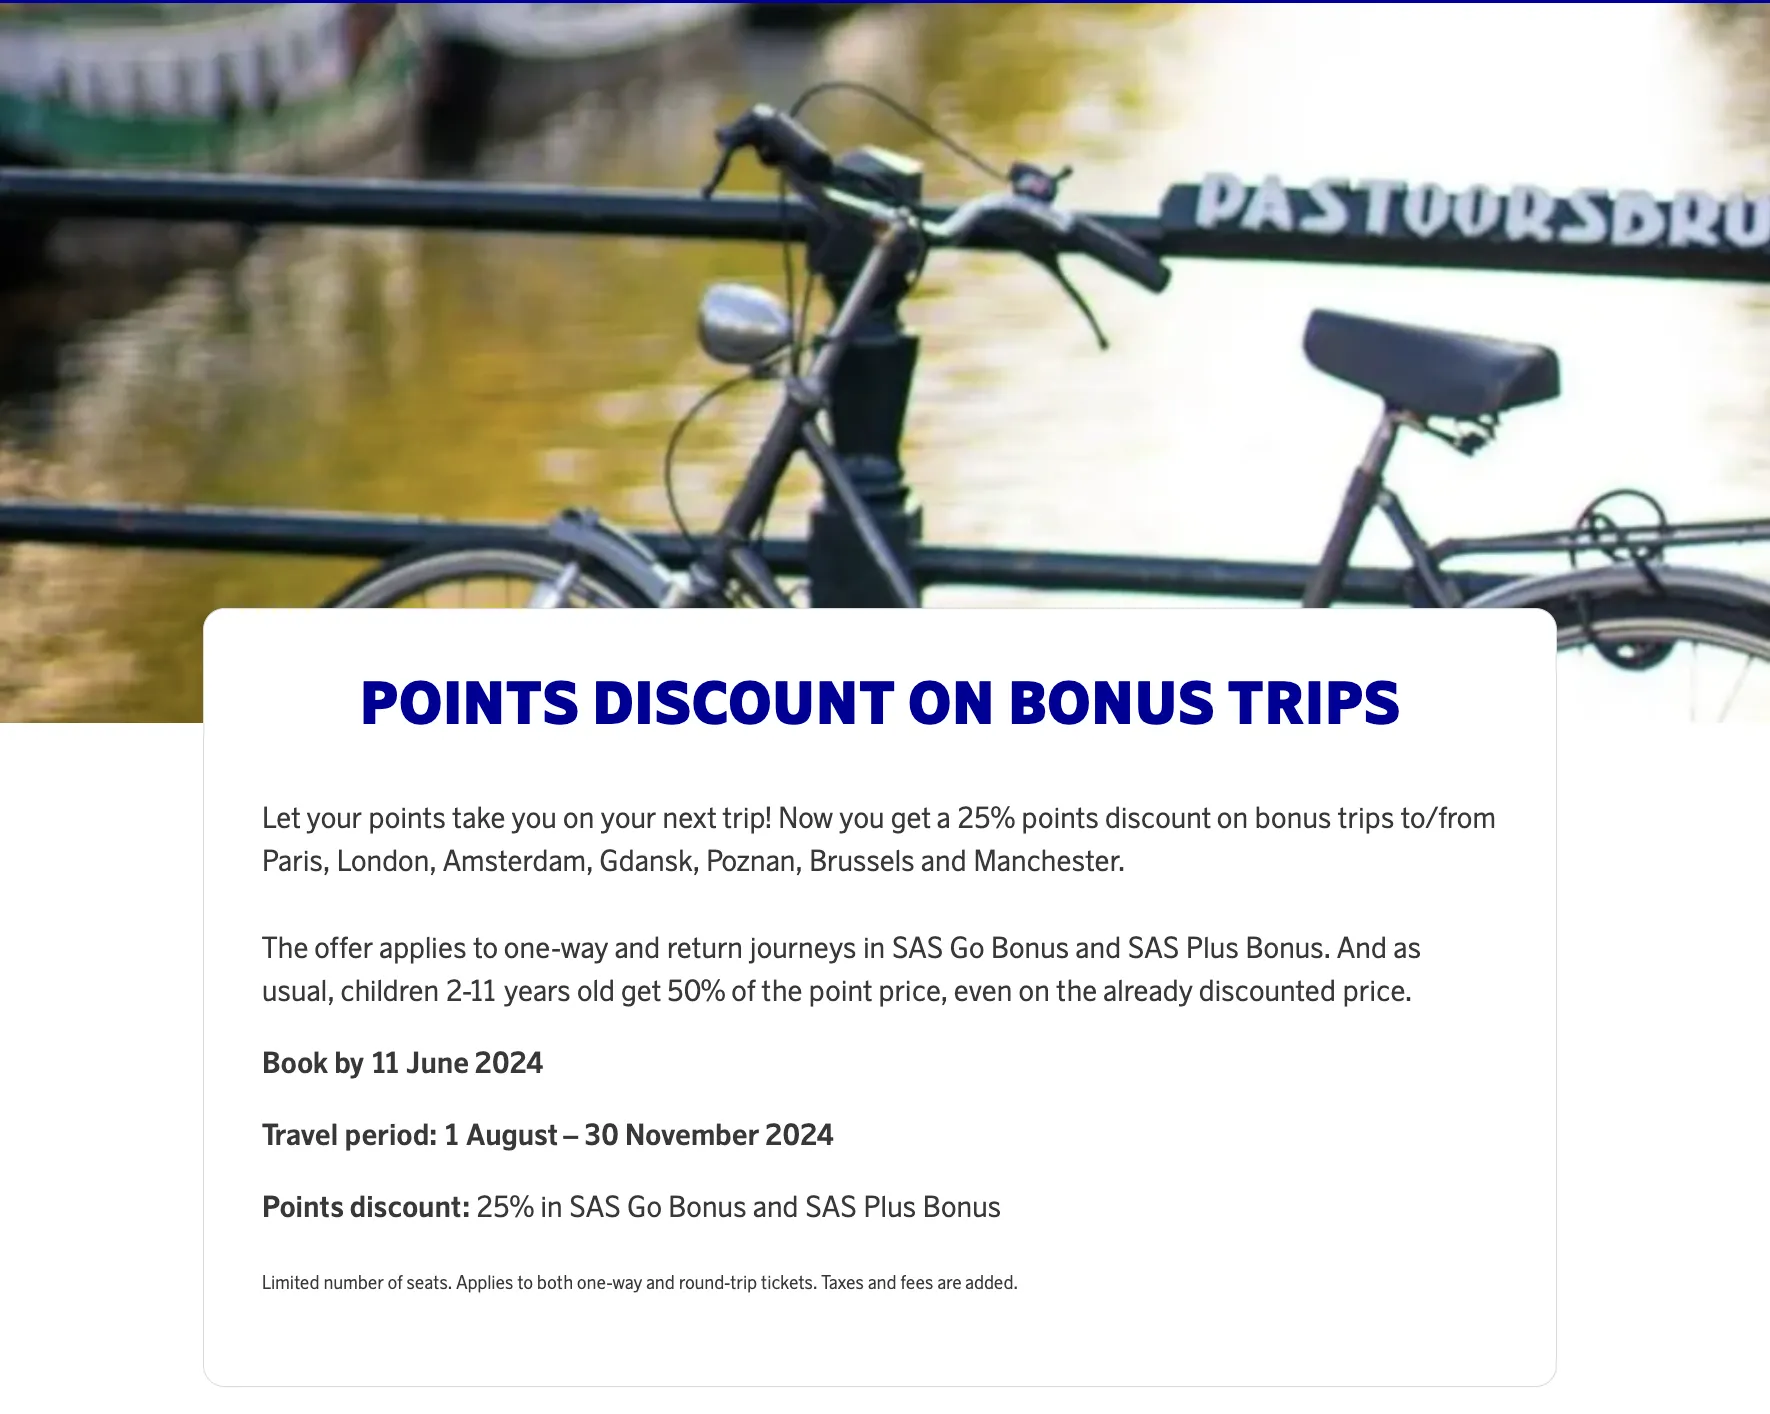 Get a 25% discount on SAS EuroBonus award trips until June 11th.